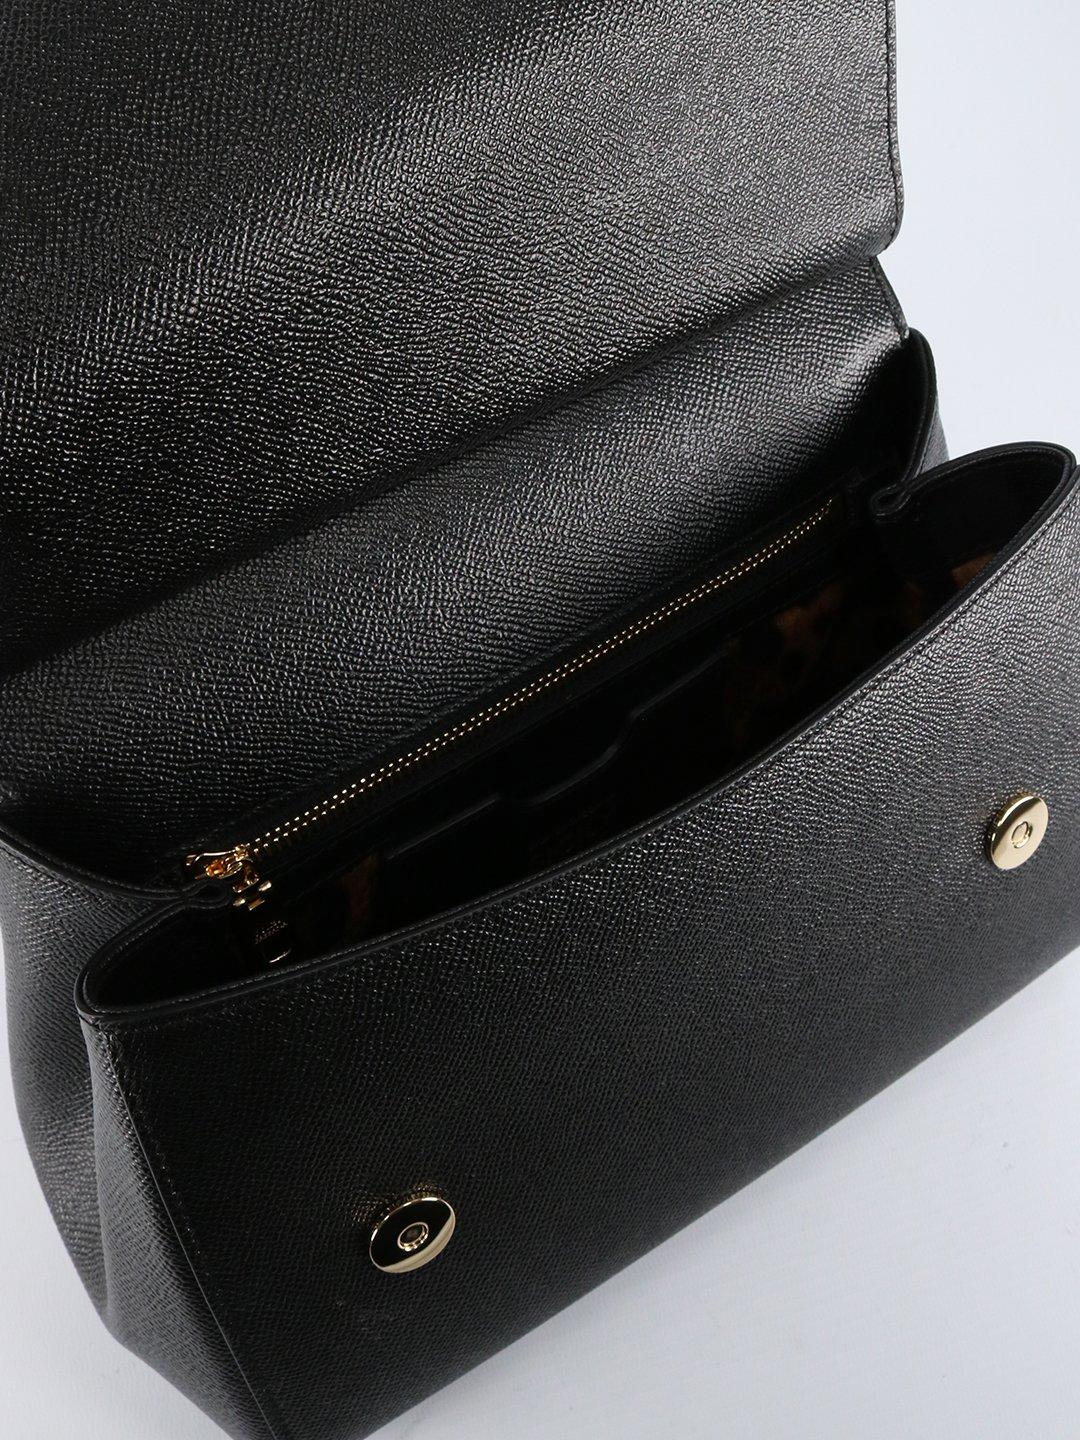 Dolce & Gabbana Leather Medium Sicily Bag With Scarf in Black | Lyst